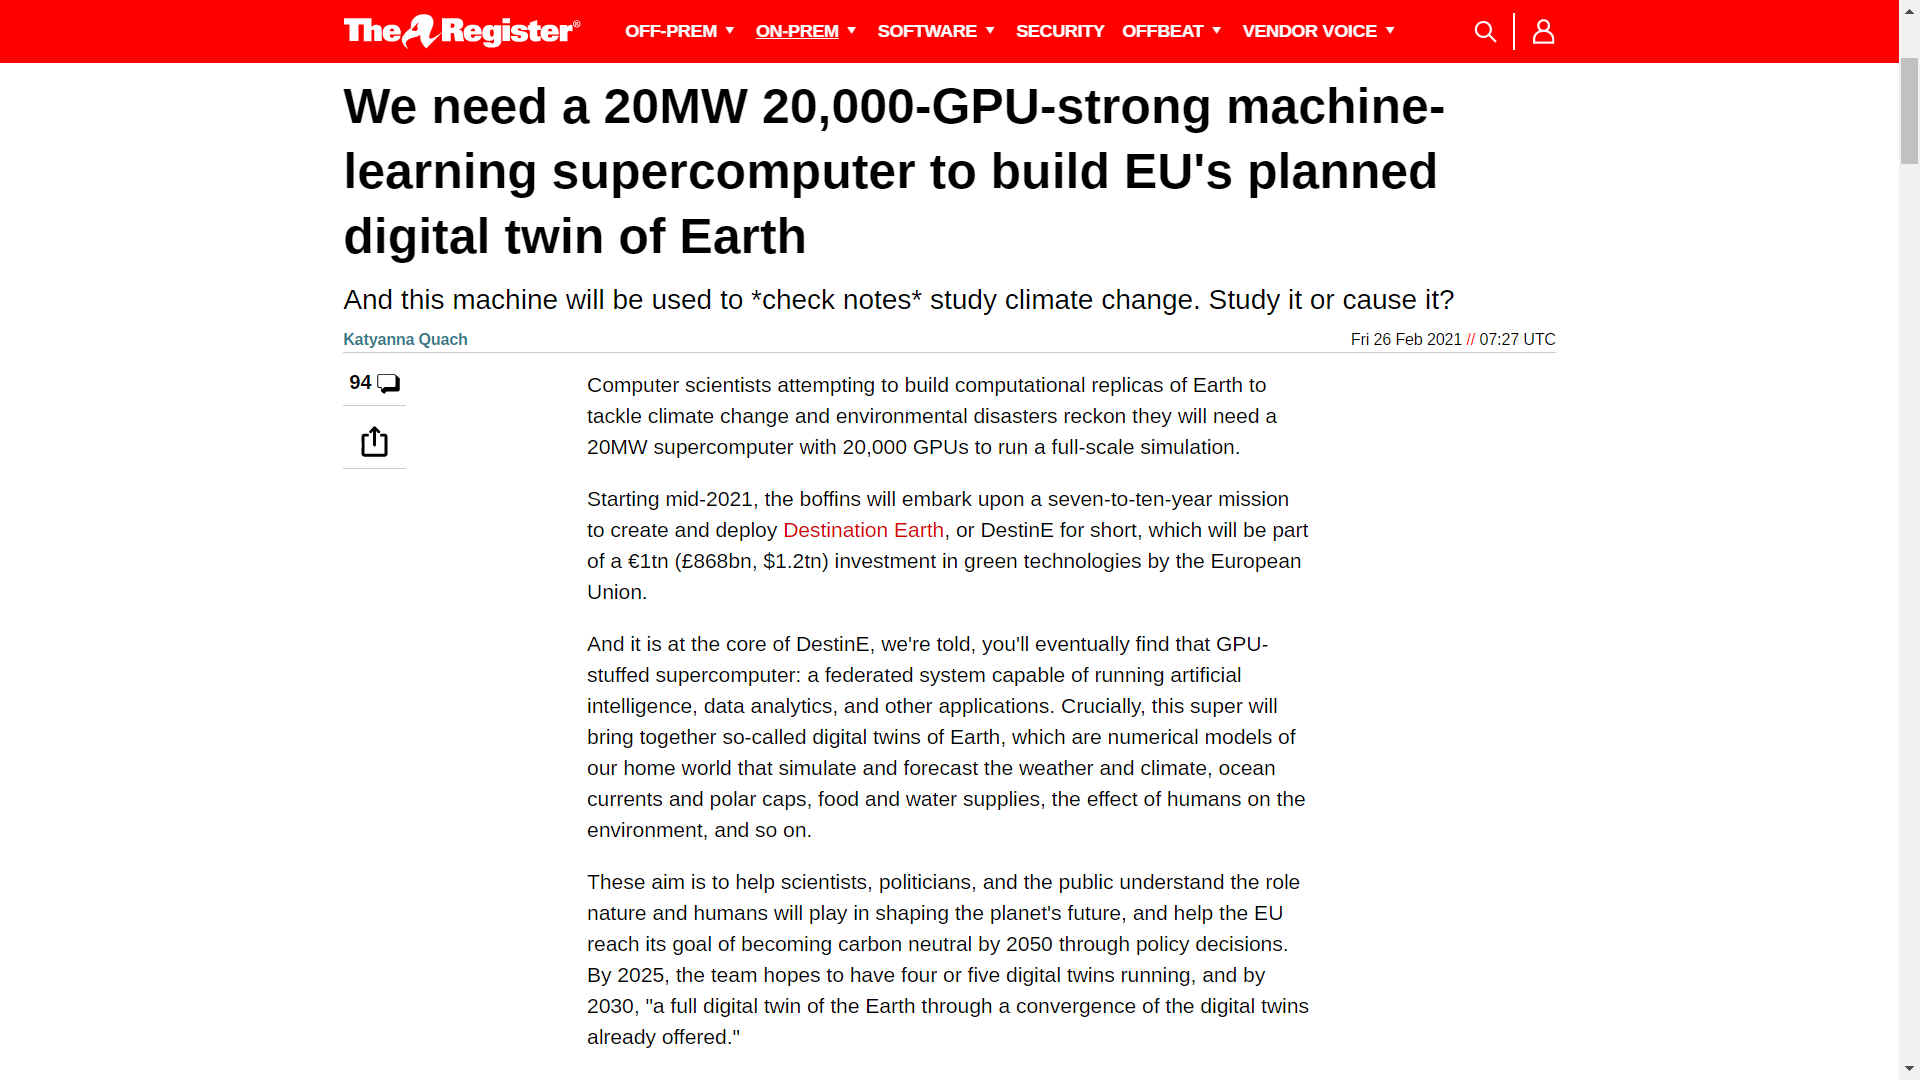 20MW, 20,000 GPU supercomputer for Digital Twin of Earth